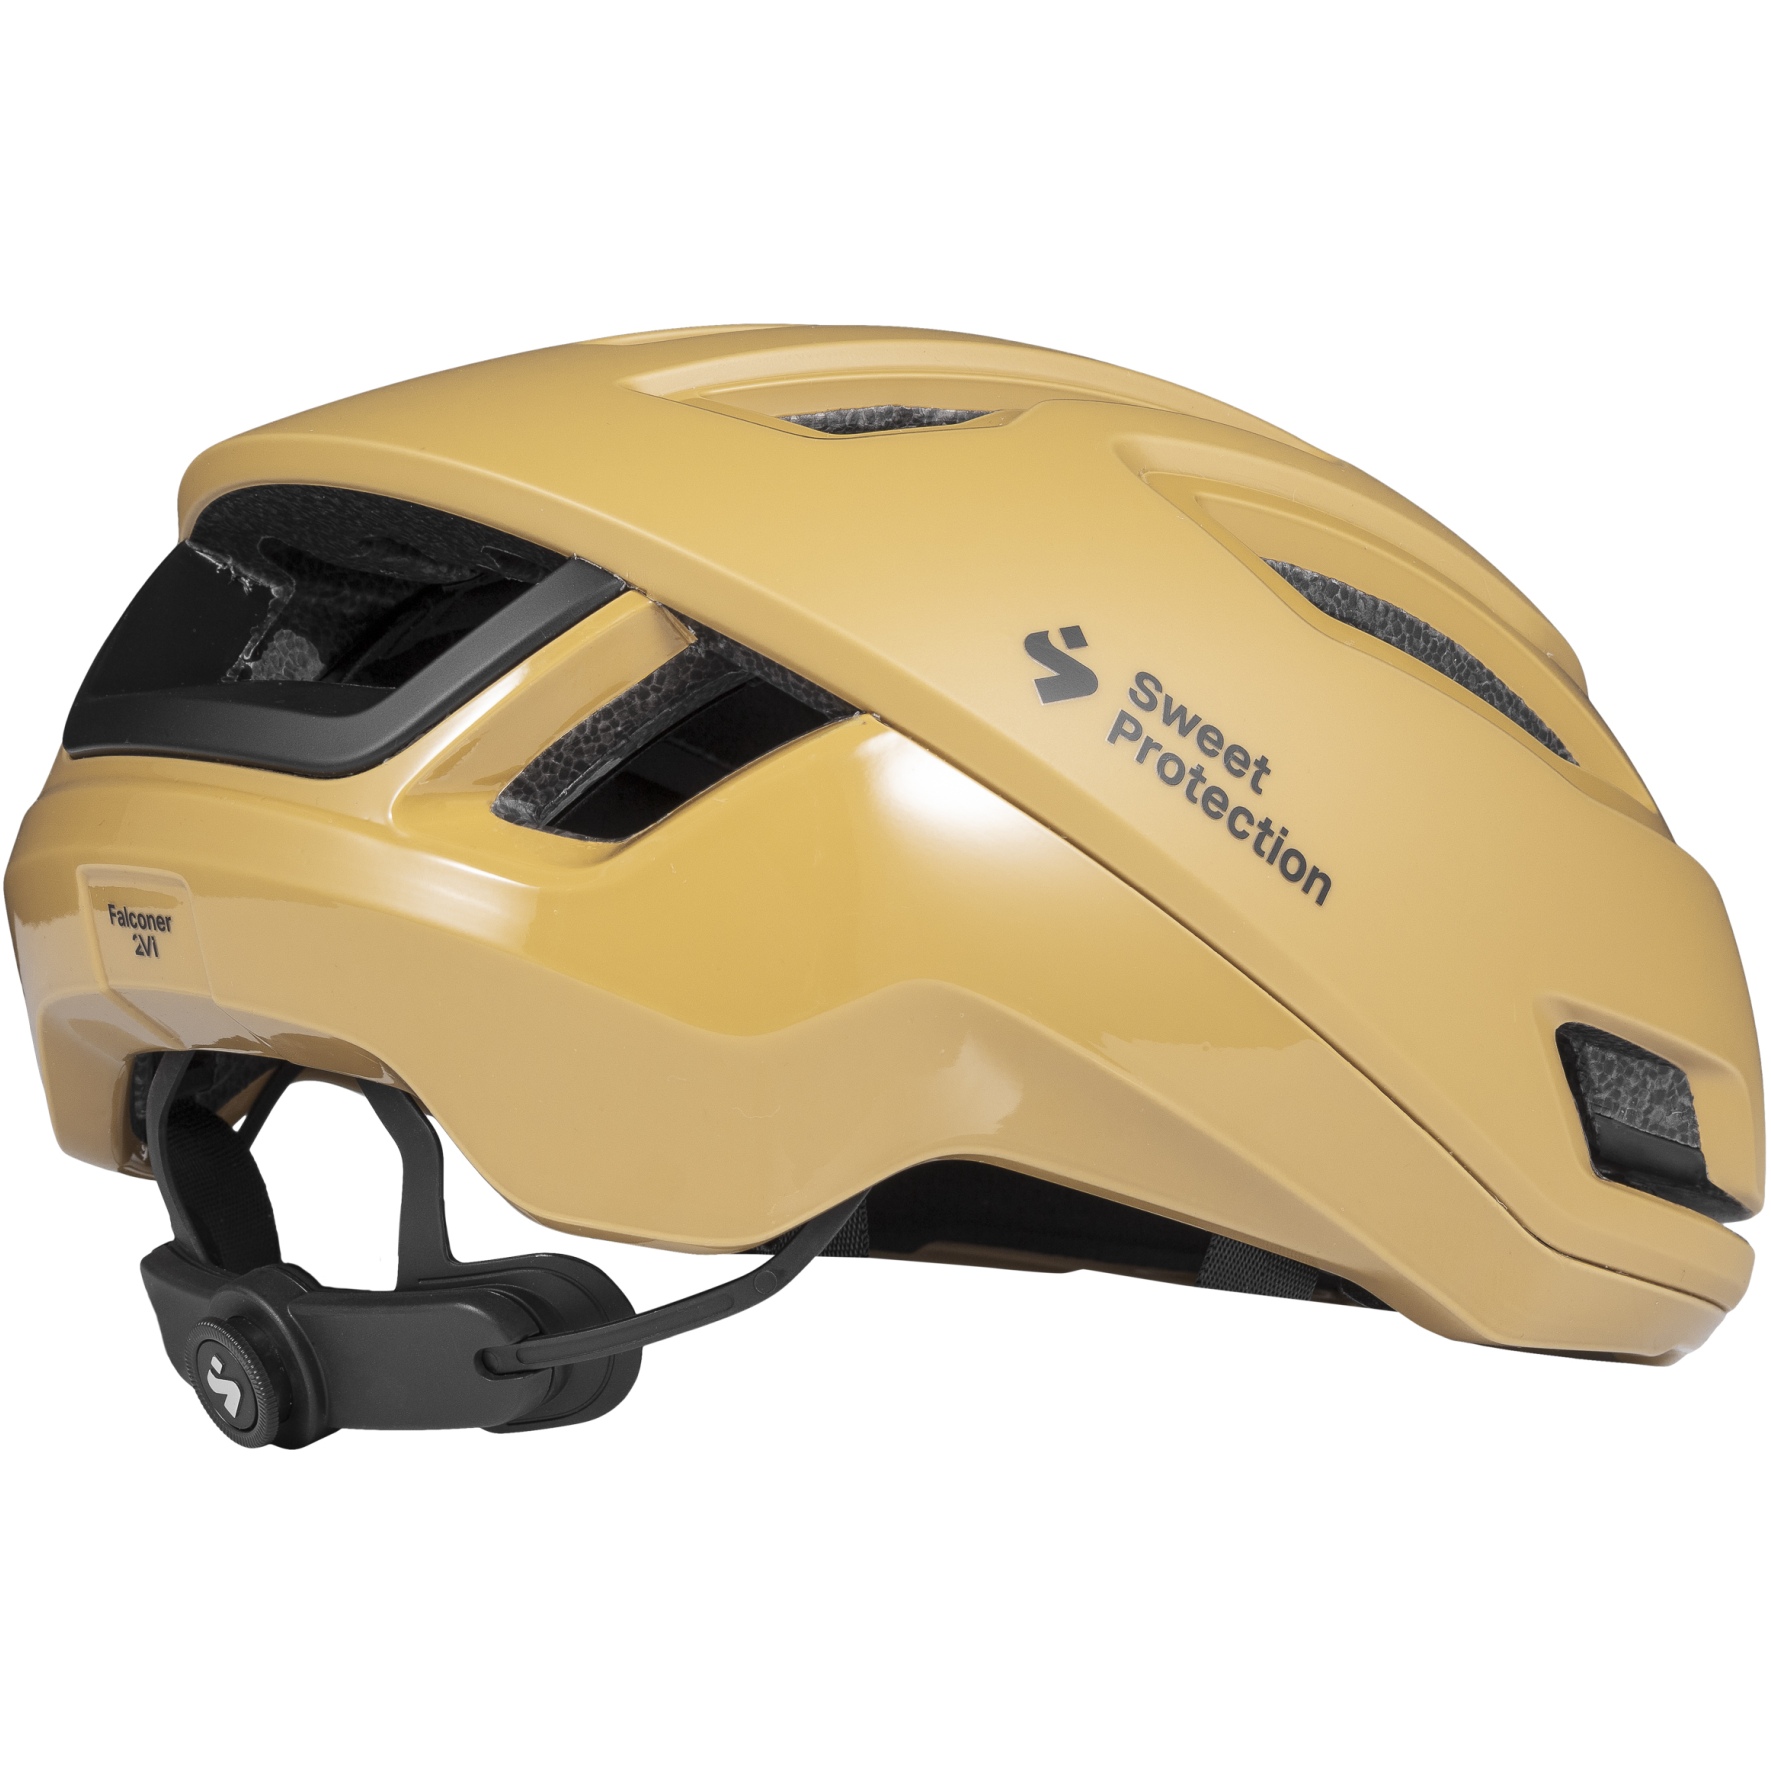 SWEET Protection Dissenter MIPS Helmet - Dusk